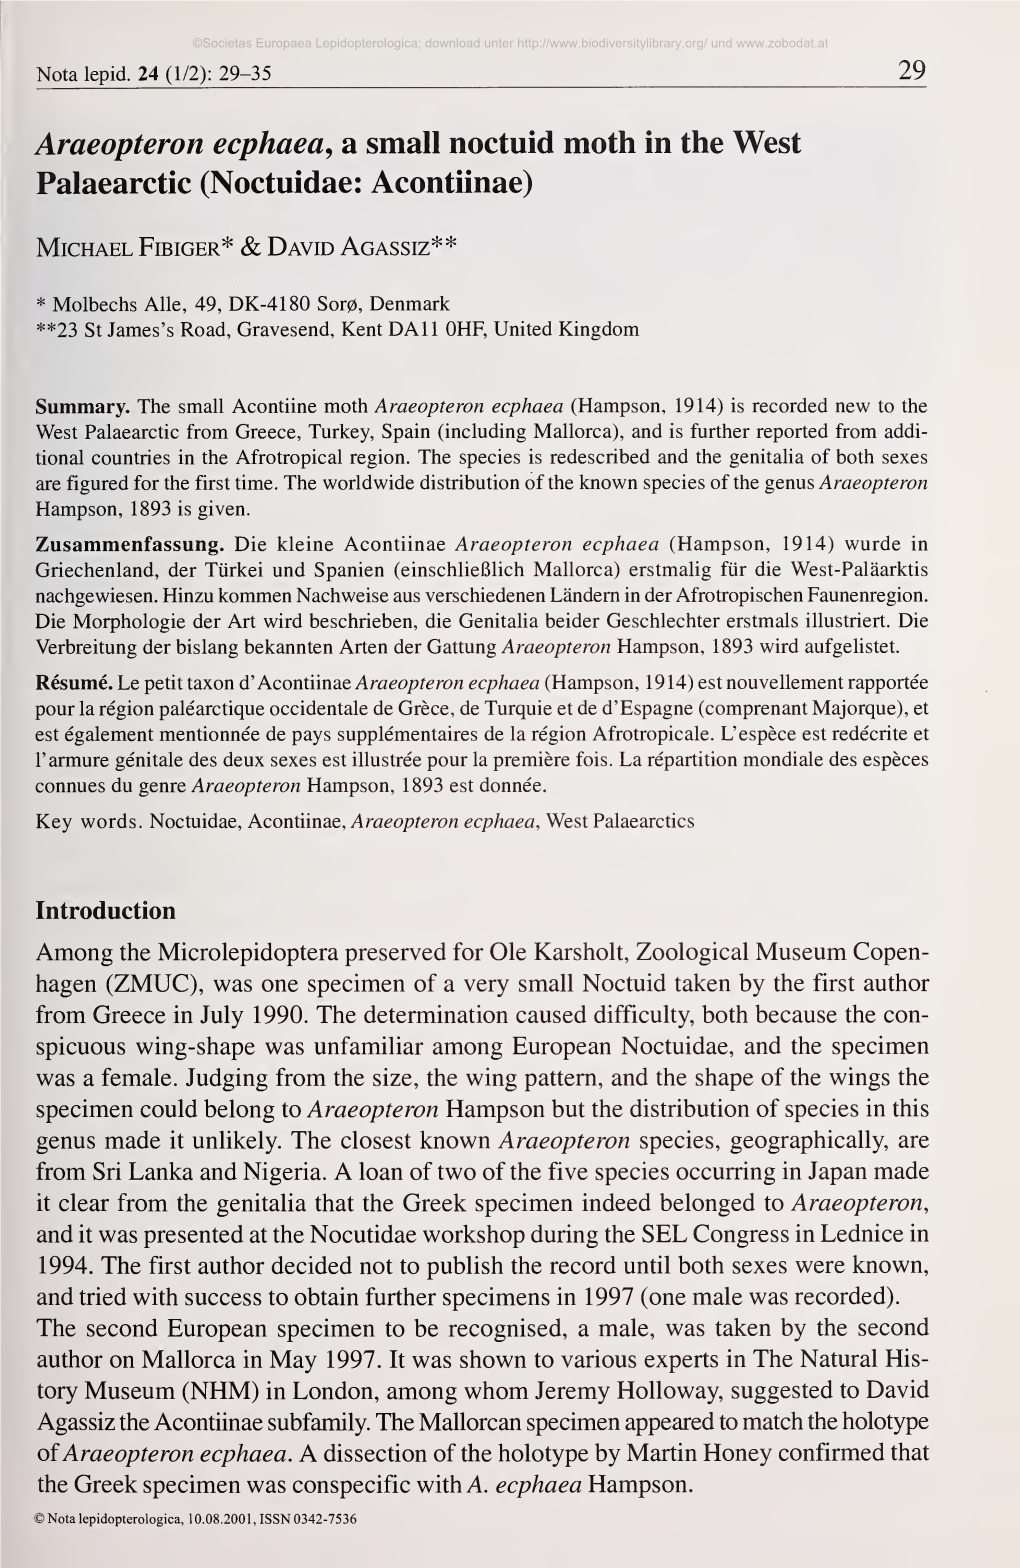 Nota Lepidopterologica, 10.08.2001, ISSN 0342-7536 ©Societas Europaea Lepidopterologica; Download Unter Und